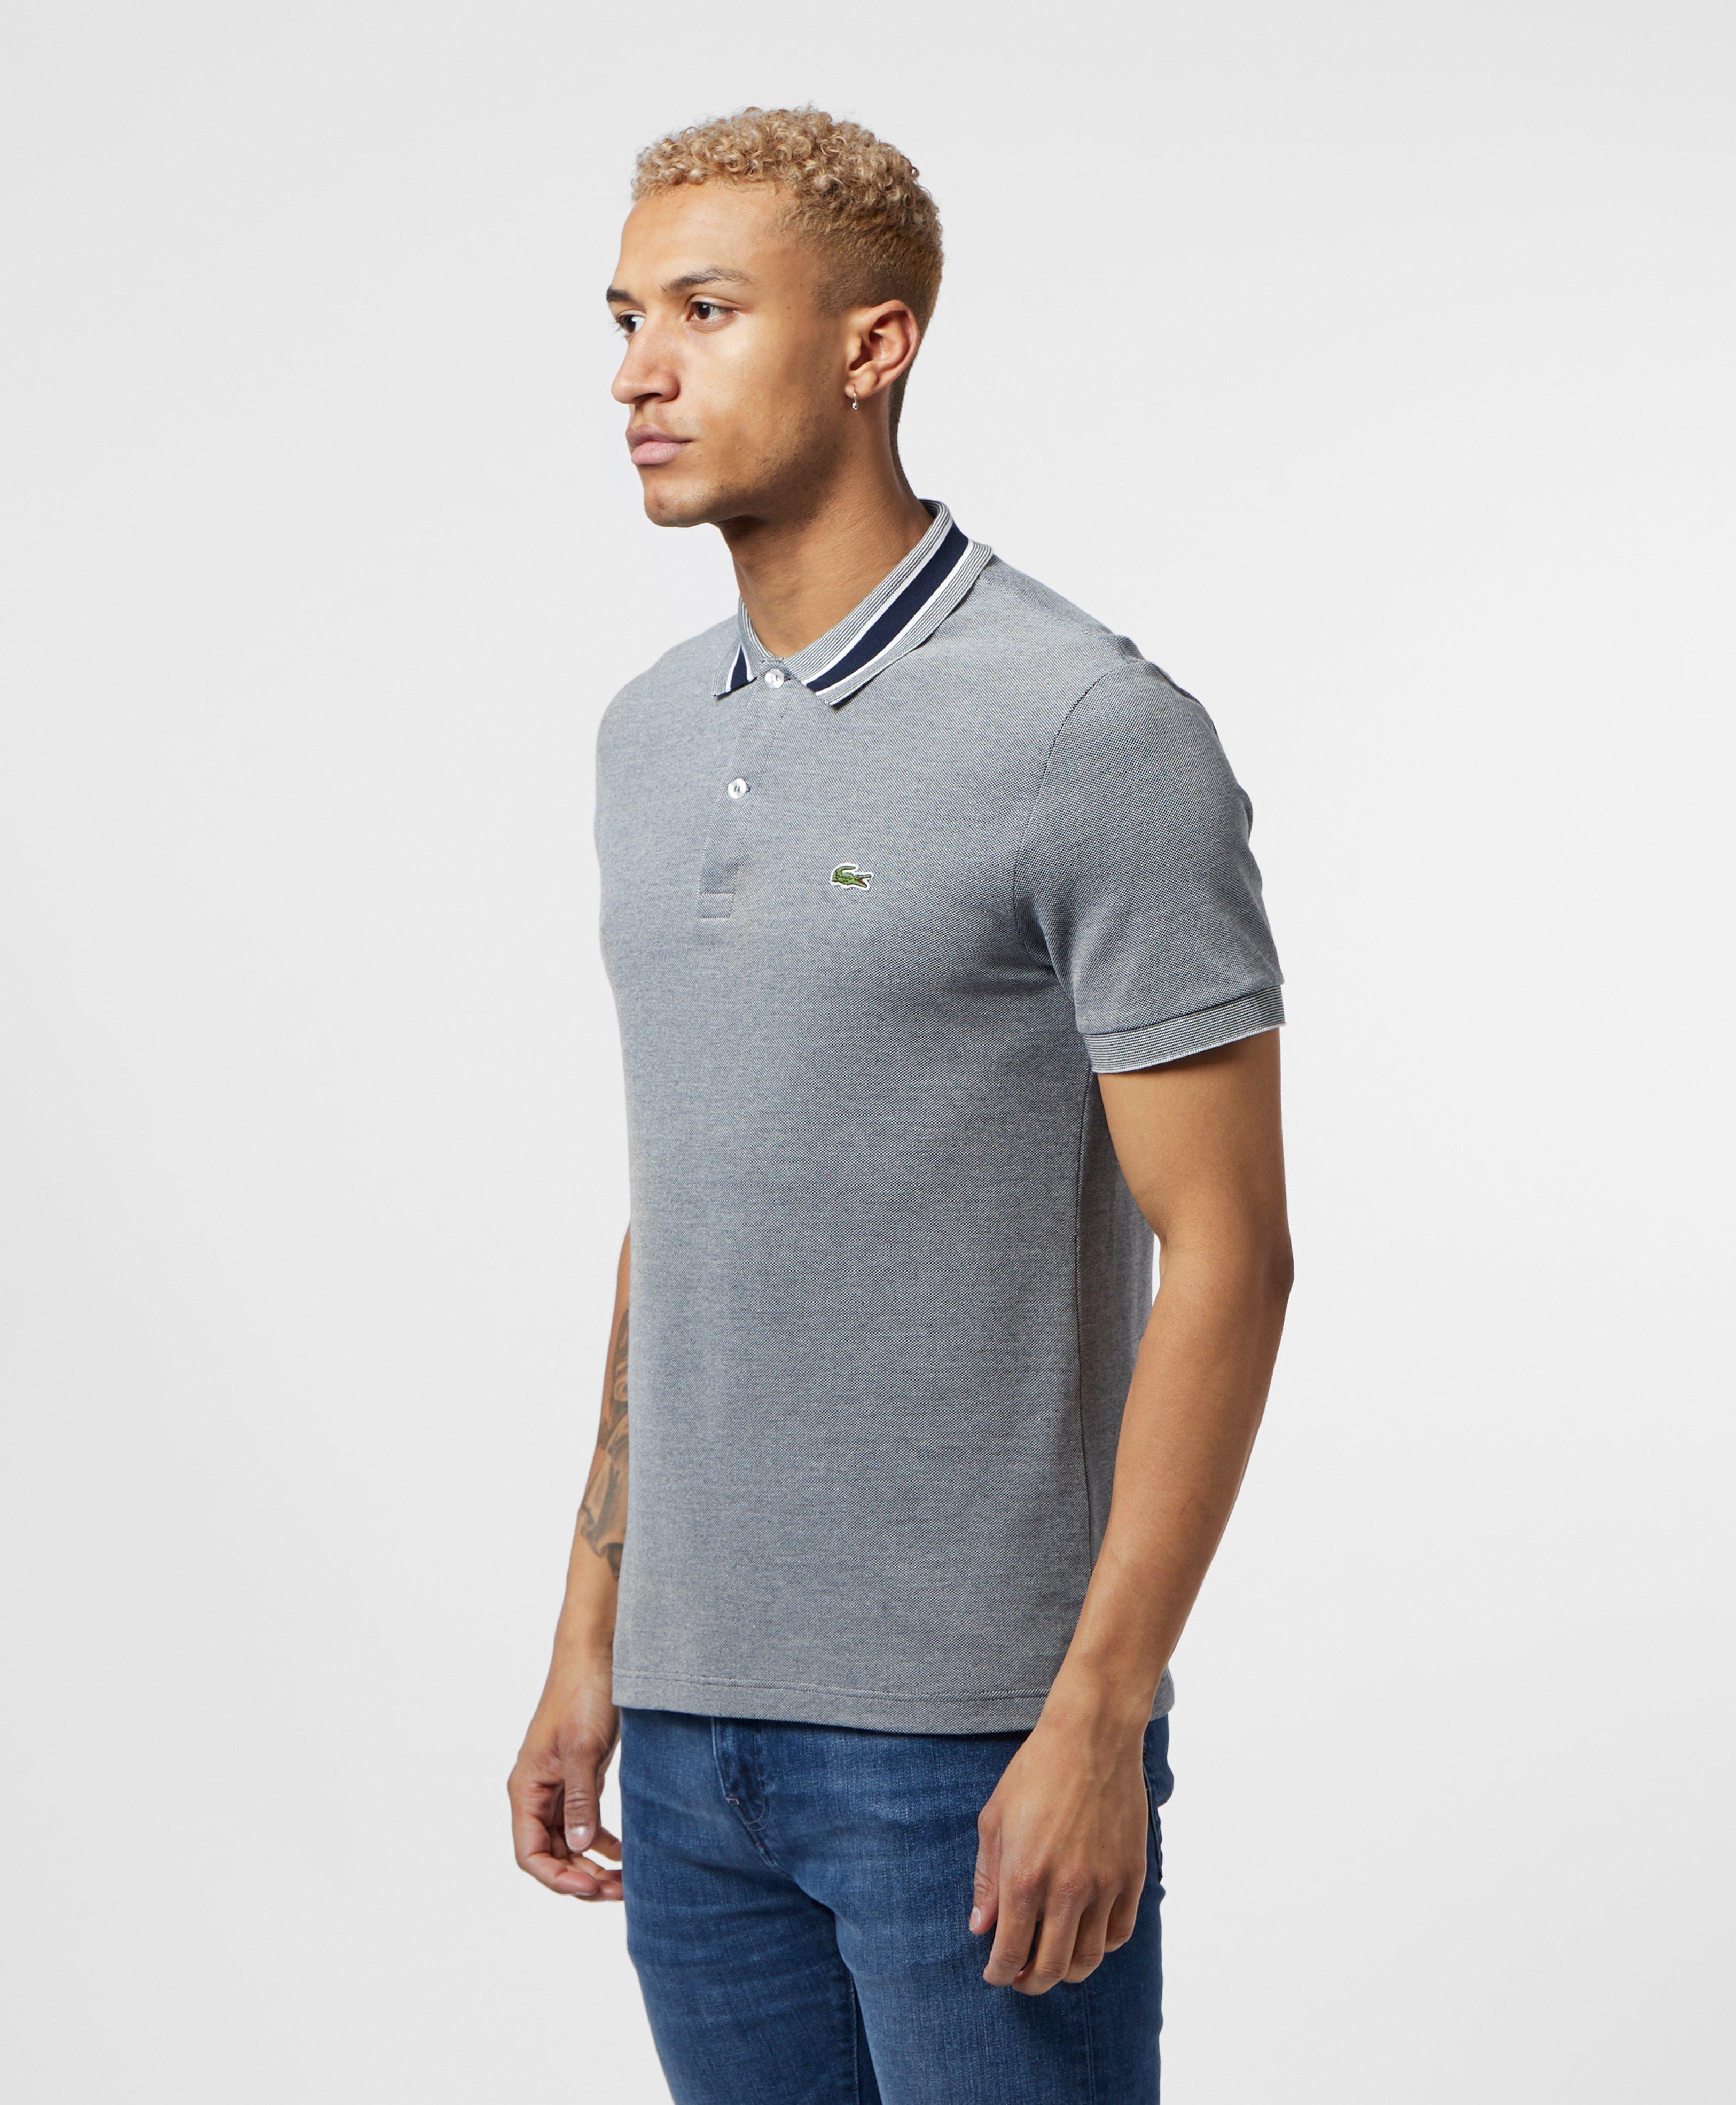 Lacoste Collar Stripe Short Sleeve Polo Shirt in Gray for Men - Lyst